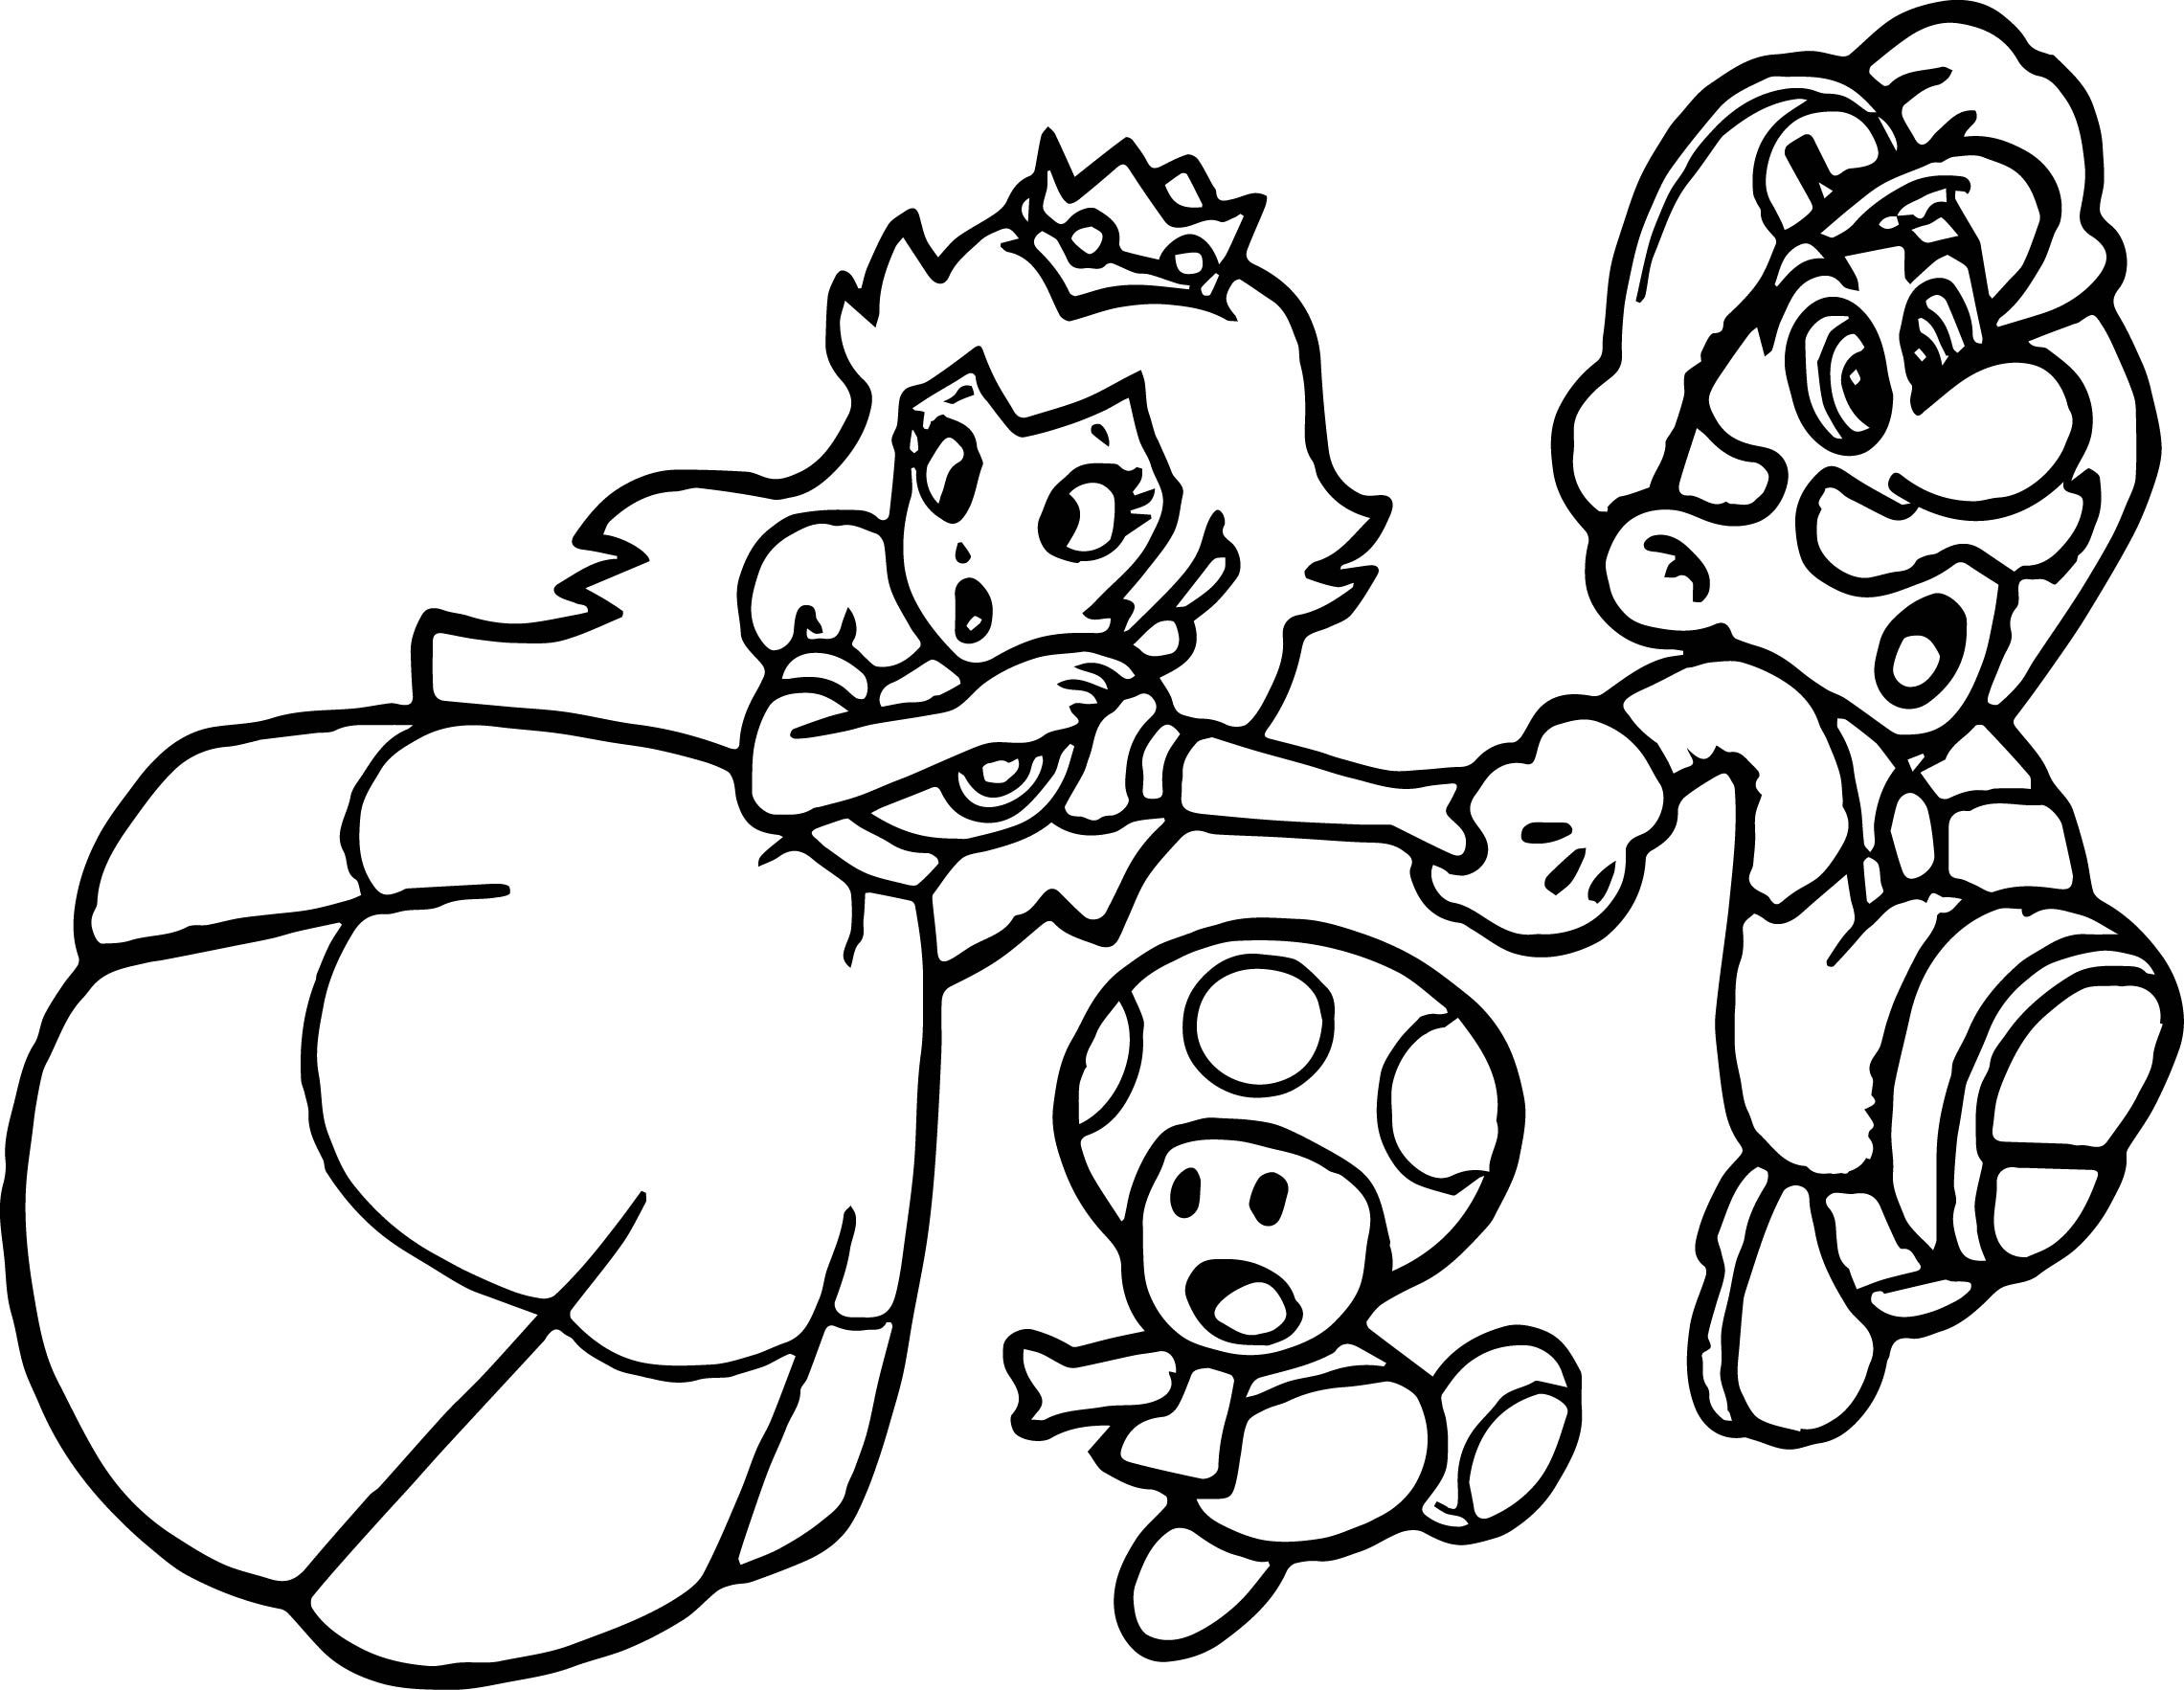 Super Mario Princess Mushroom Coloring Page With Pages Yoshi ...